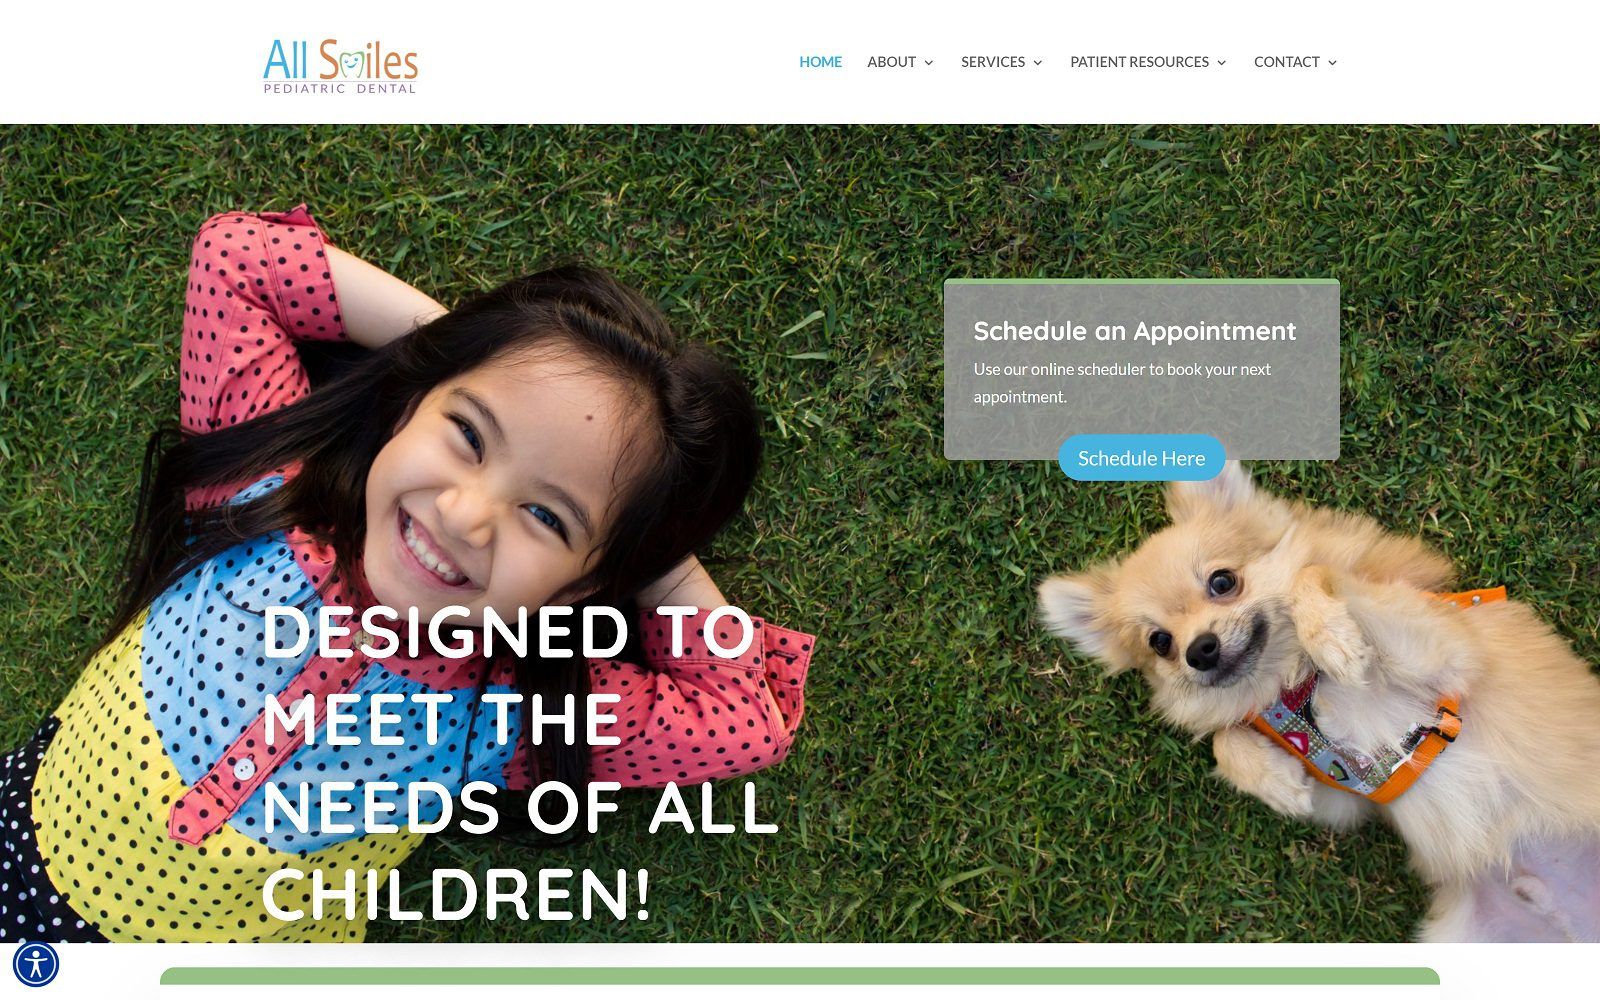 The screenshot of all smiles pediatric dental website